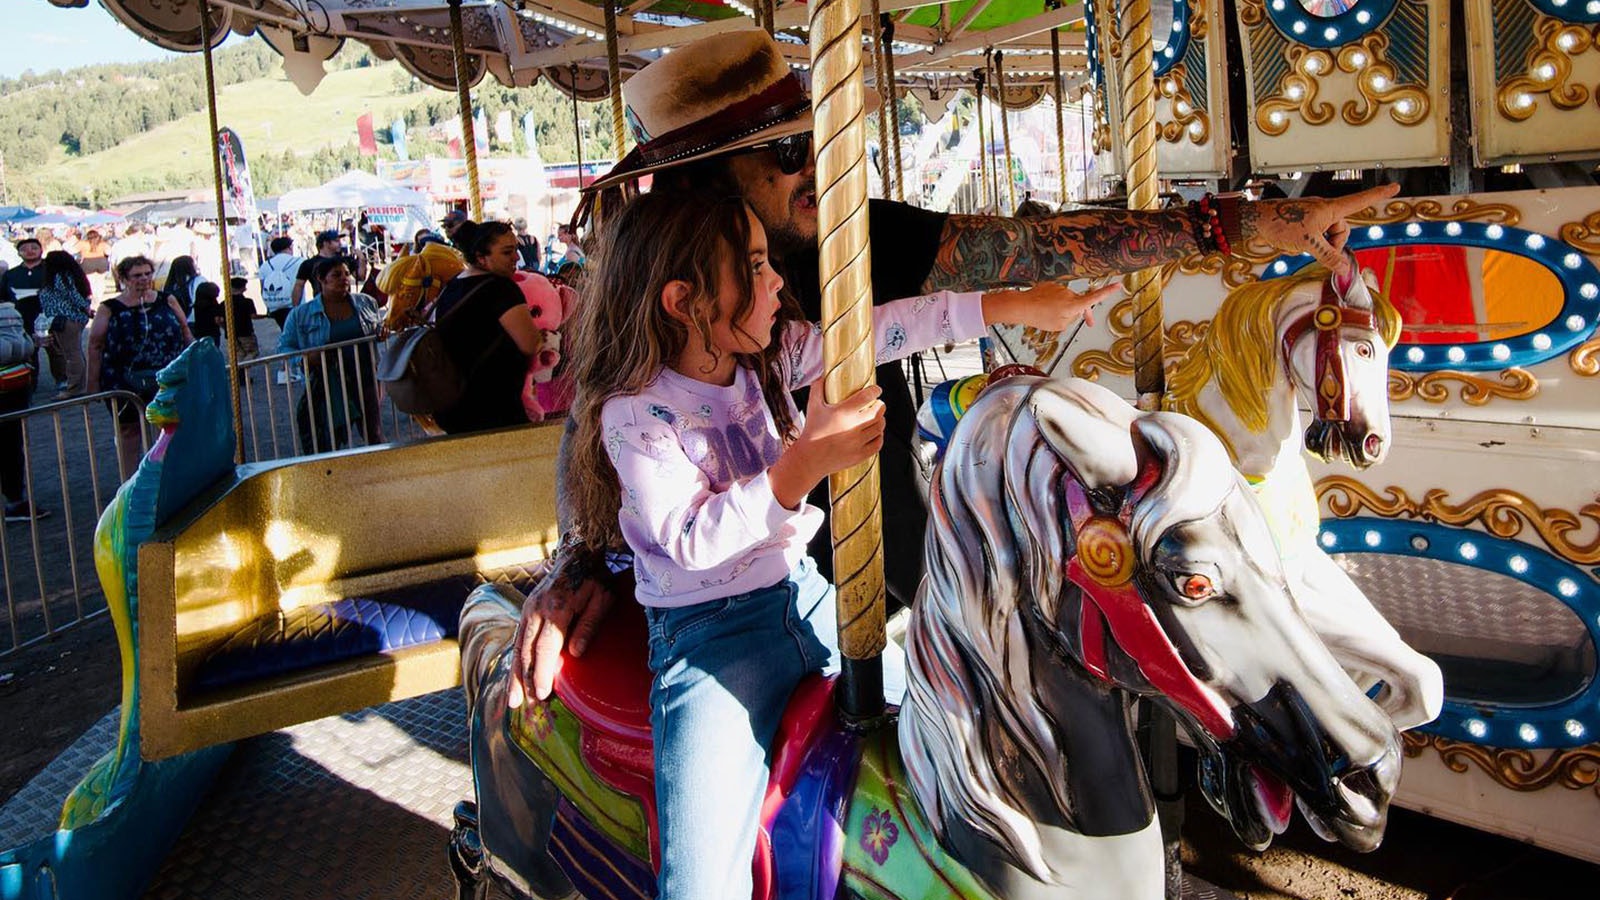 Mötley Crüe bassist Nikki Sixx on the carousel with daughter Ruby, 4, at the Teton County Fair.